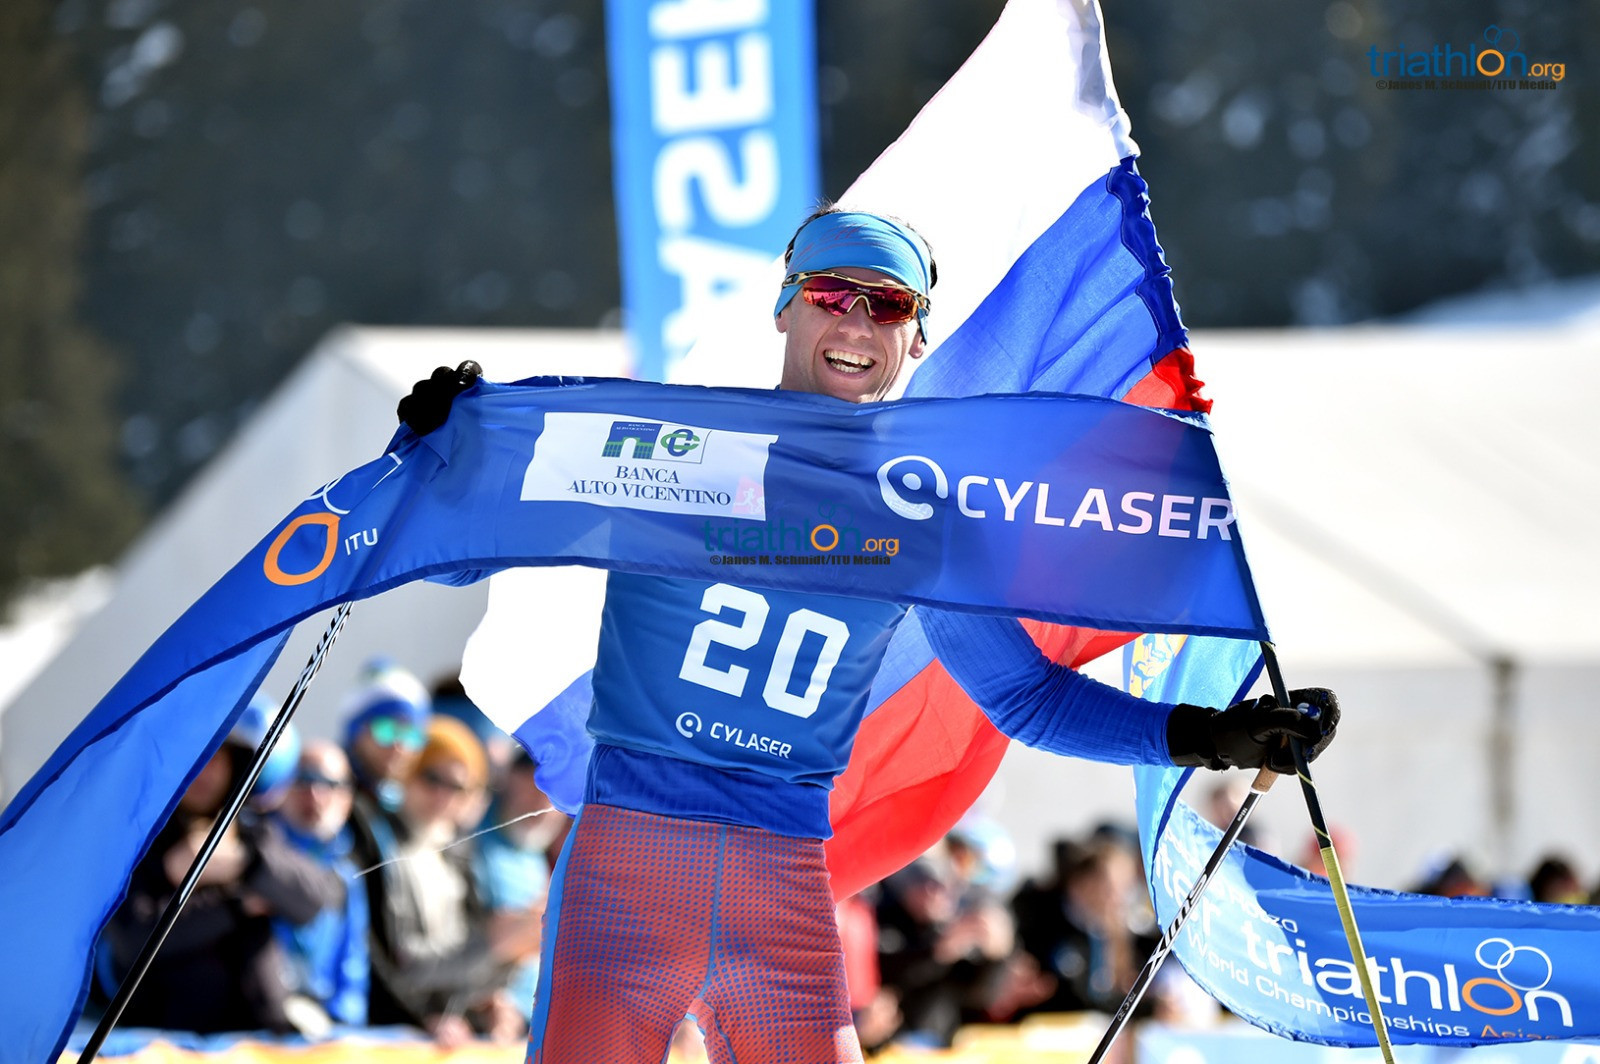 Andreev defends men's title again at ITU Winter Triathlon World Championships in Asiago